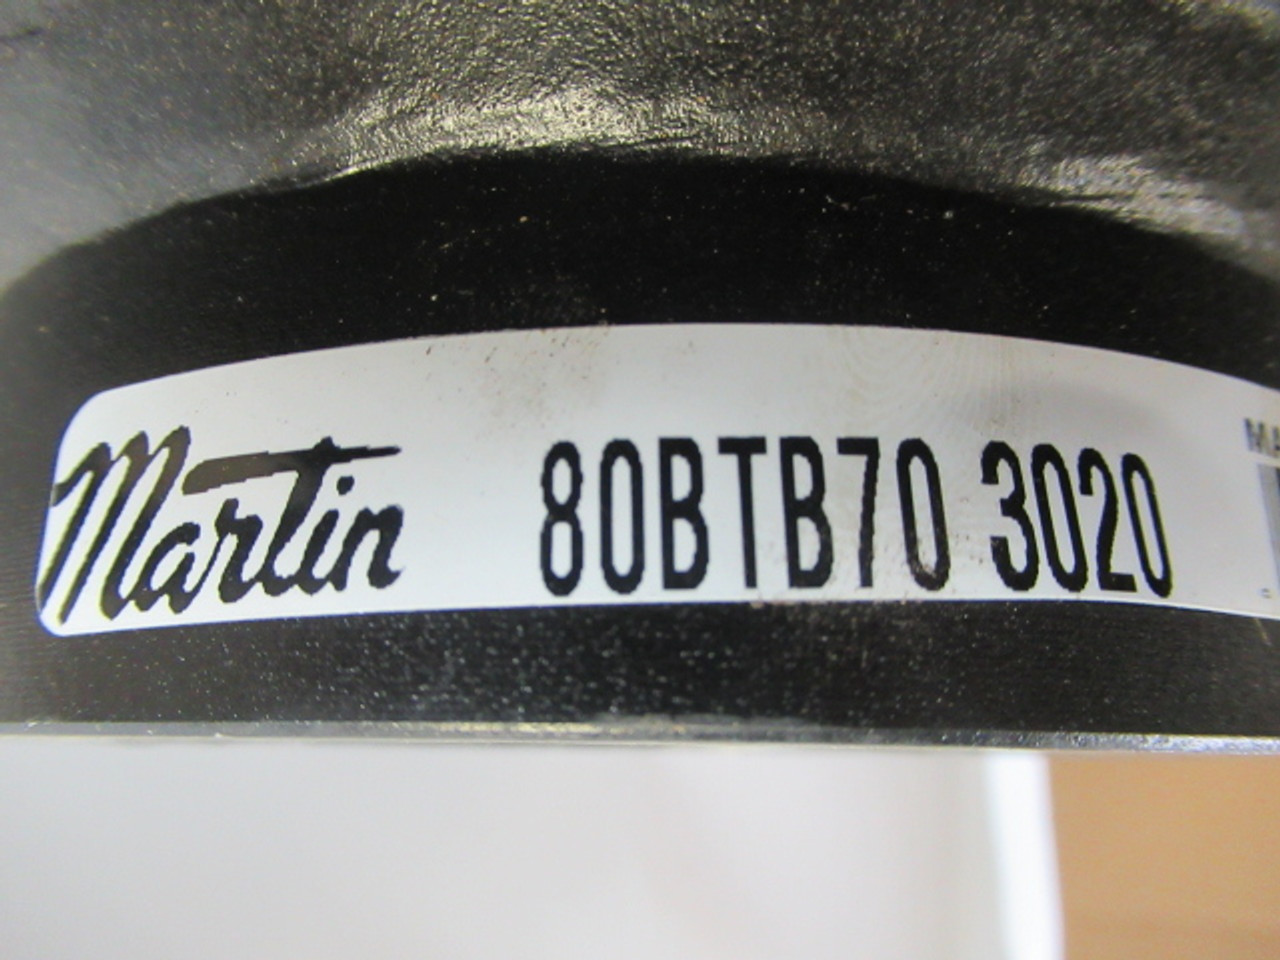 Martin 80BTB70 Taper-Lock Roller Chain Sprocket 15/16" To 3" Bore ! NEW !